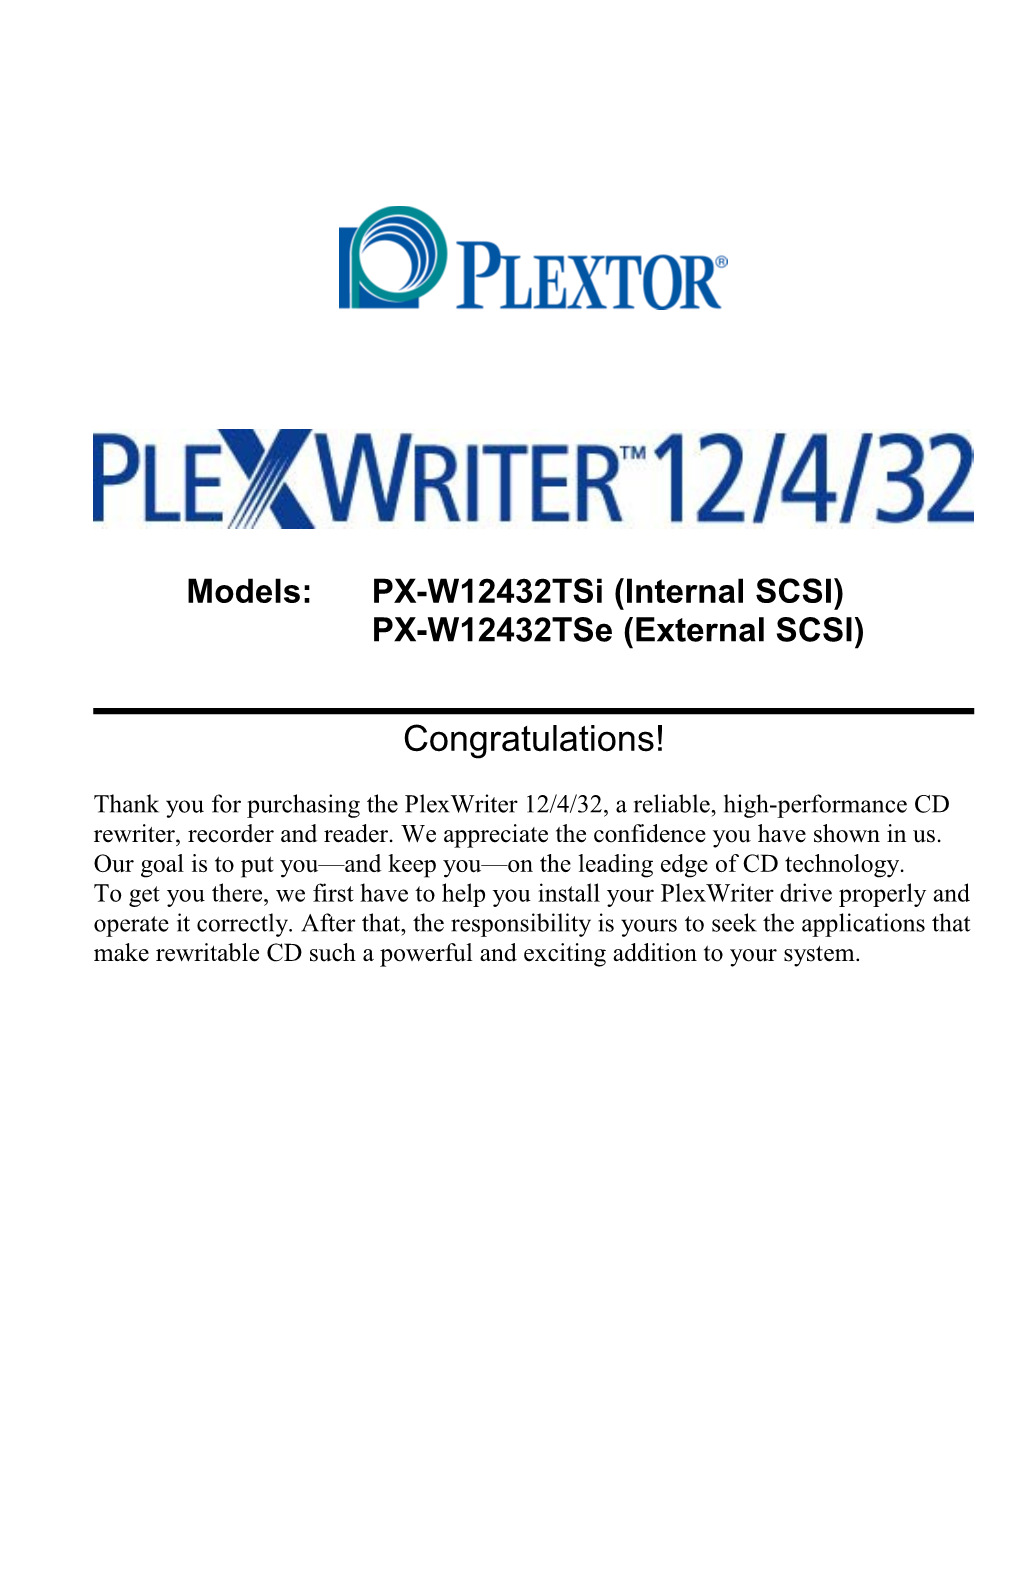 Plextor 12/4/32 Manual, 3Rd Draft